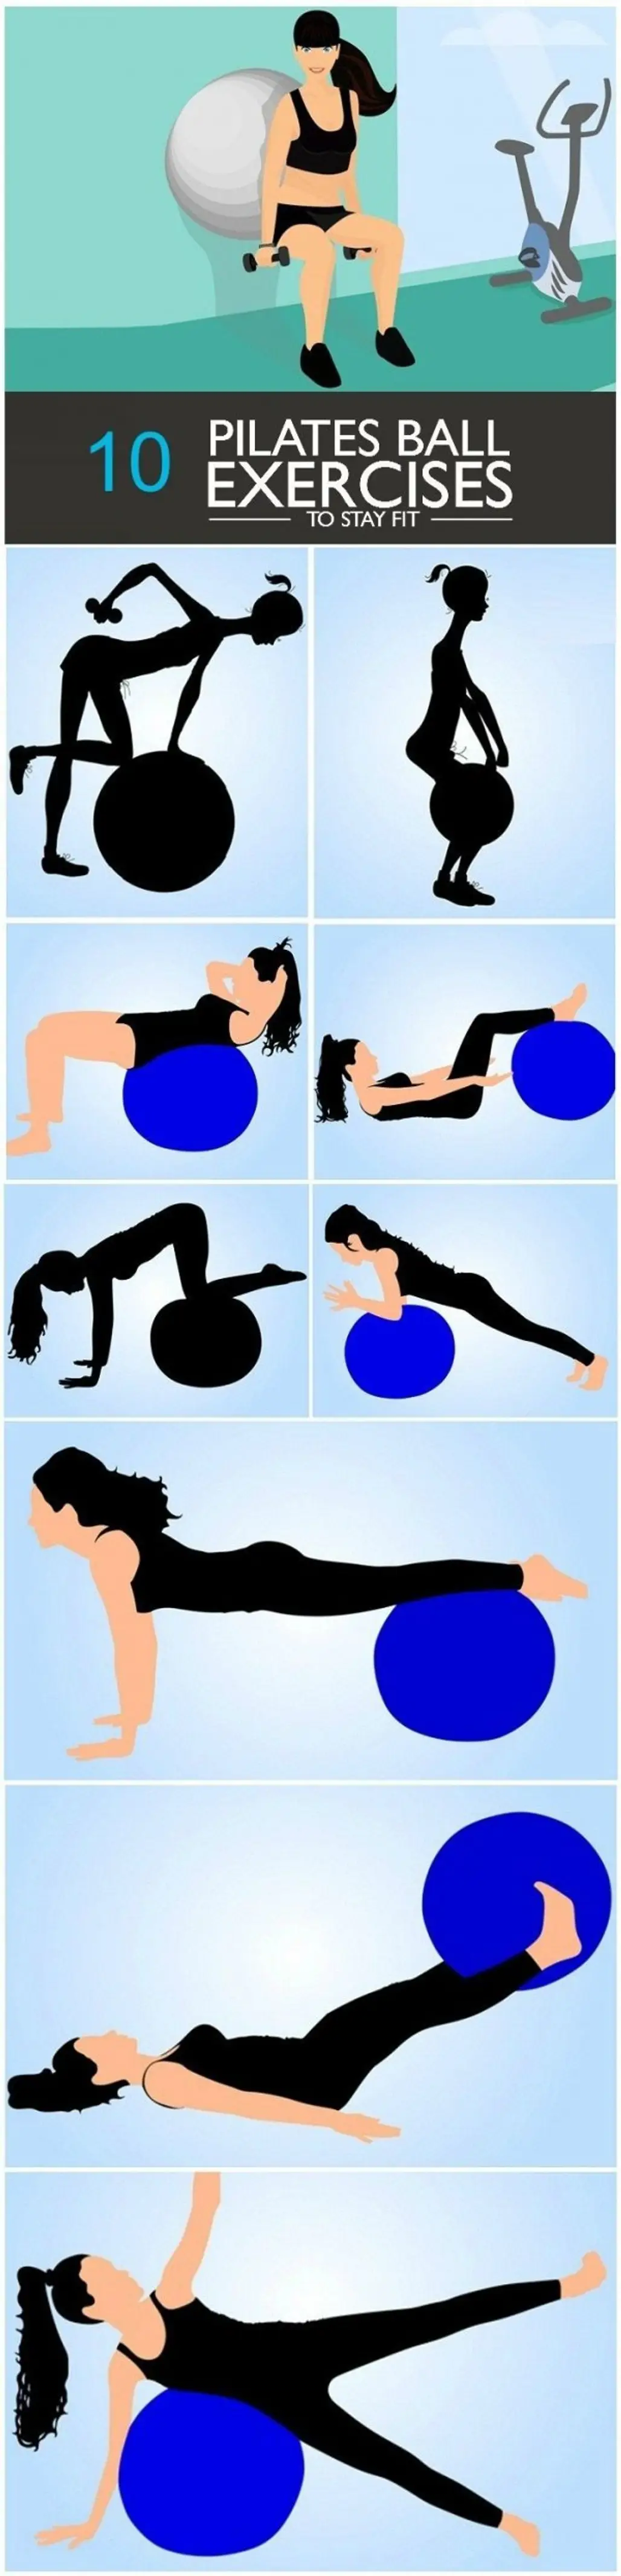 Pilates Ball Exercises